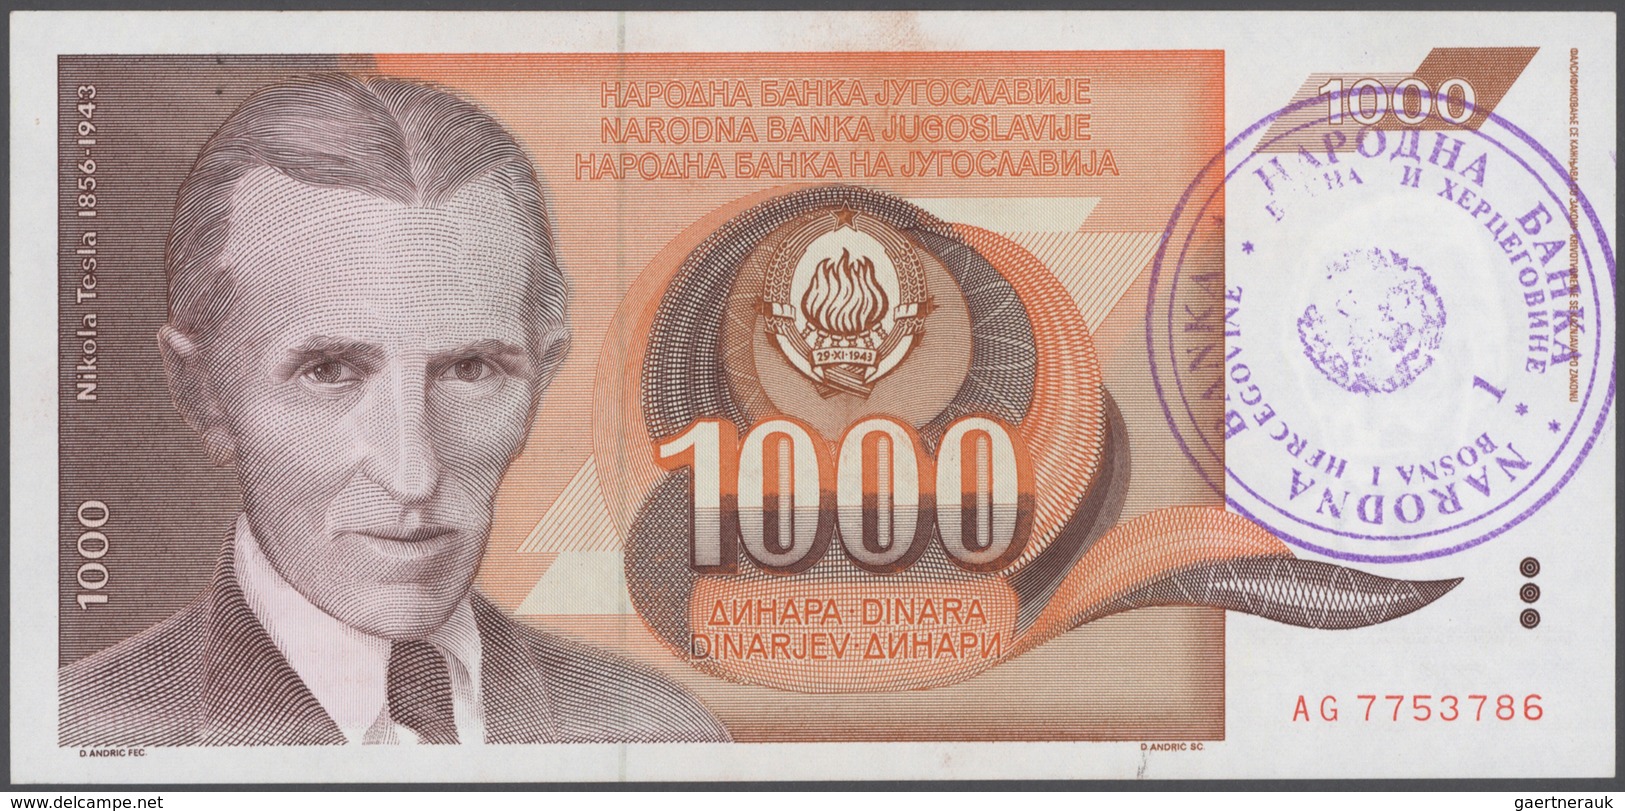 Alle Welt: Collectors album with more than 100 banknotes Azerbaijan, Belarus, Bosnia, Moldova, Kyrgy